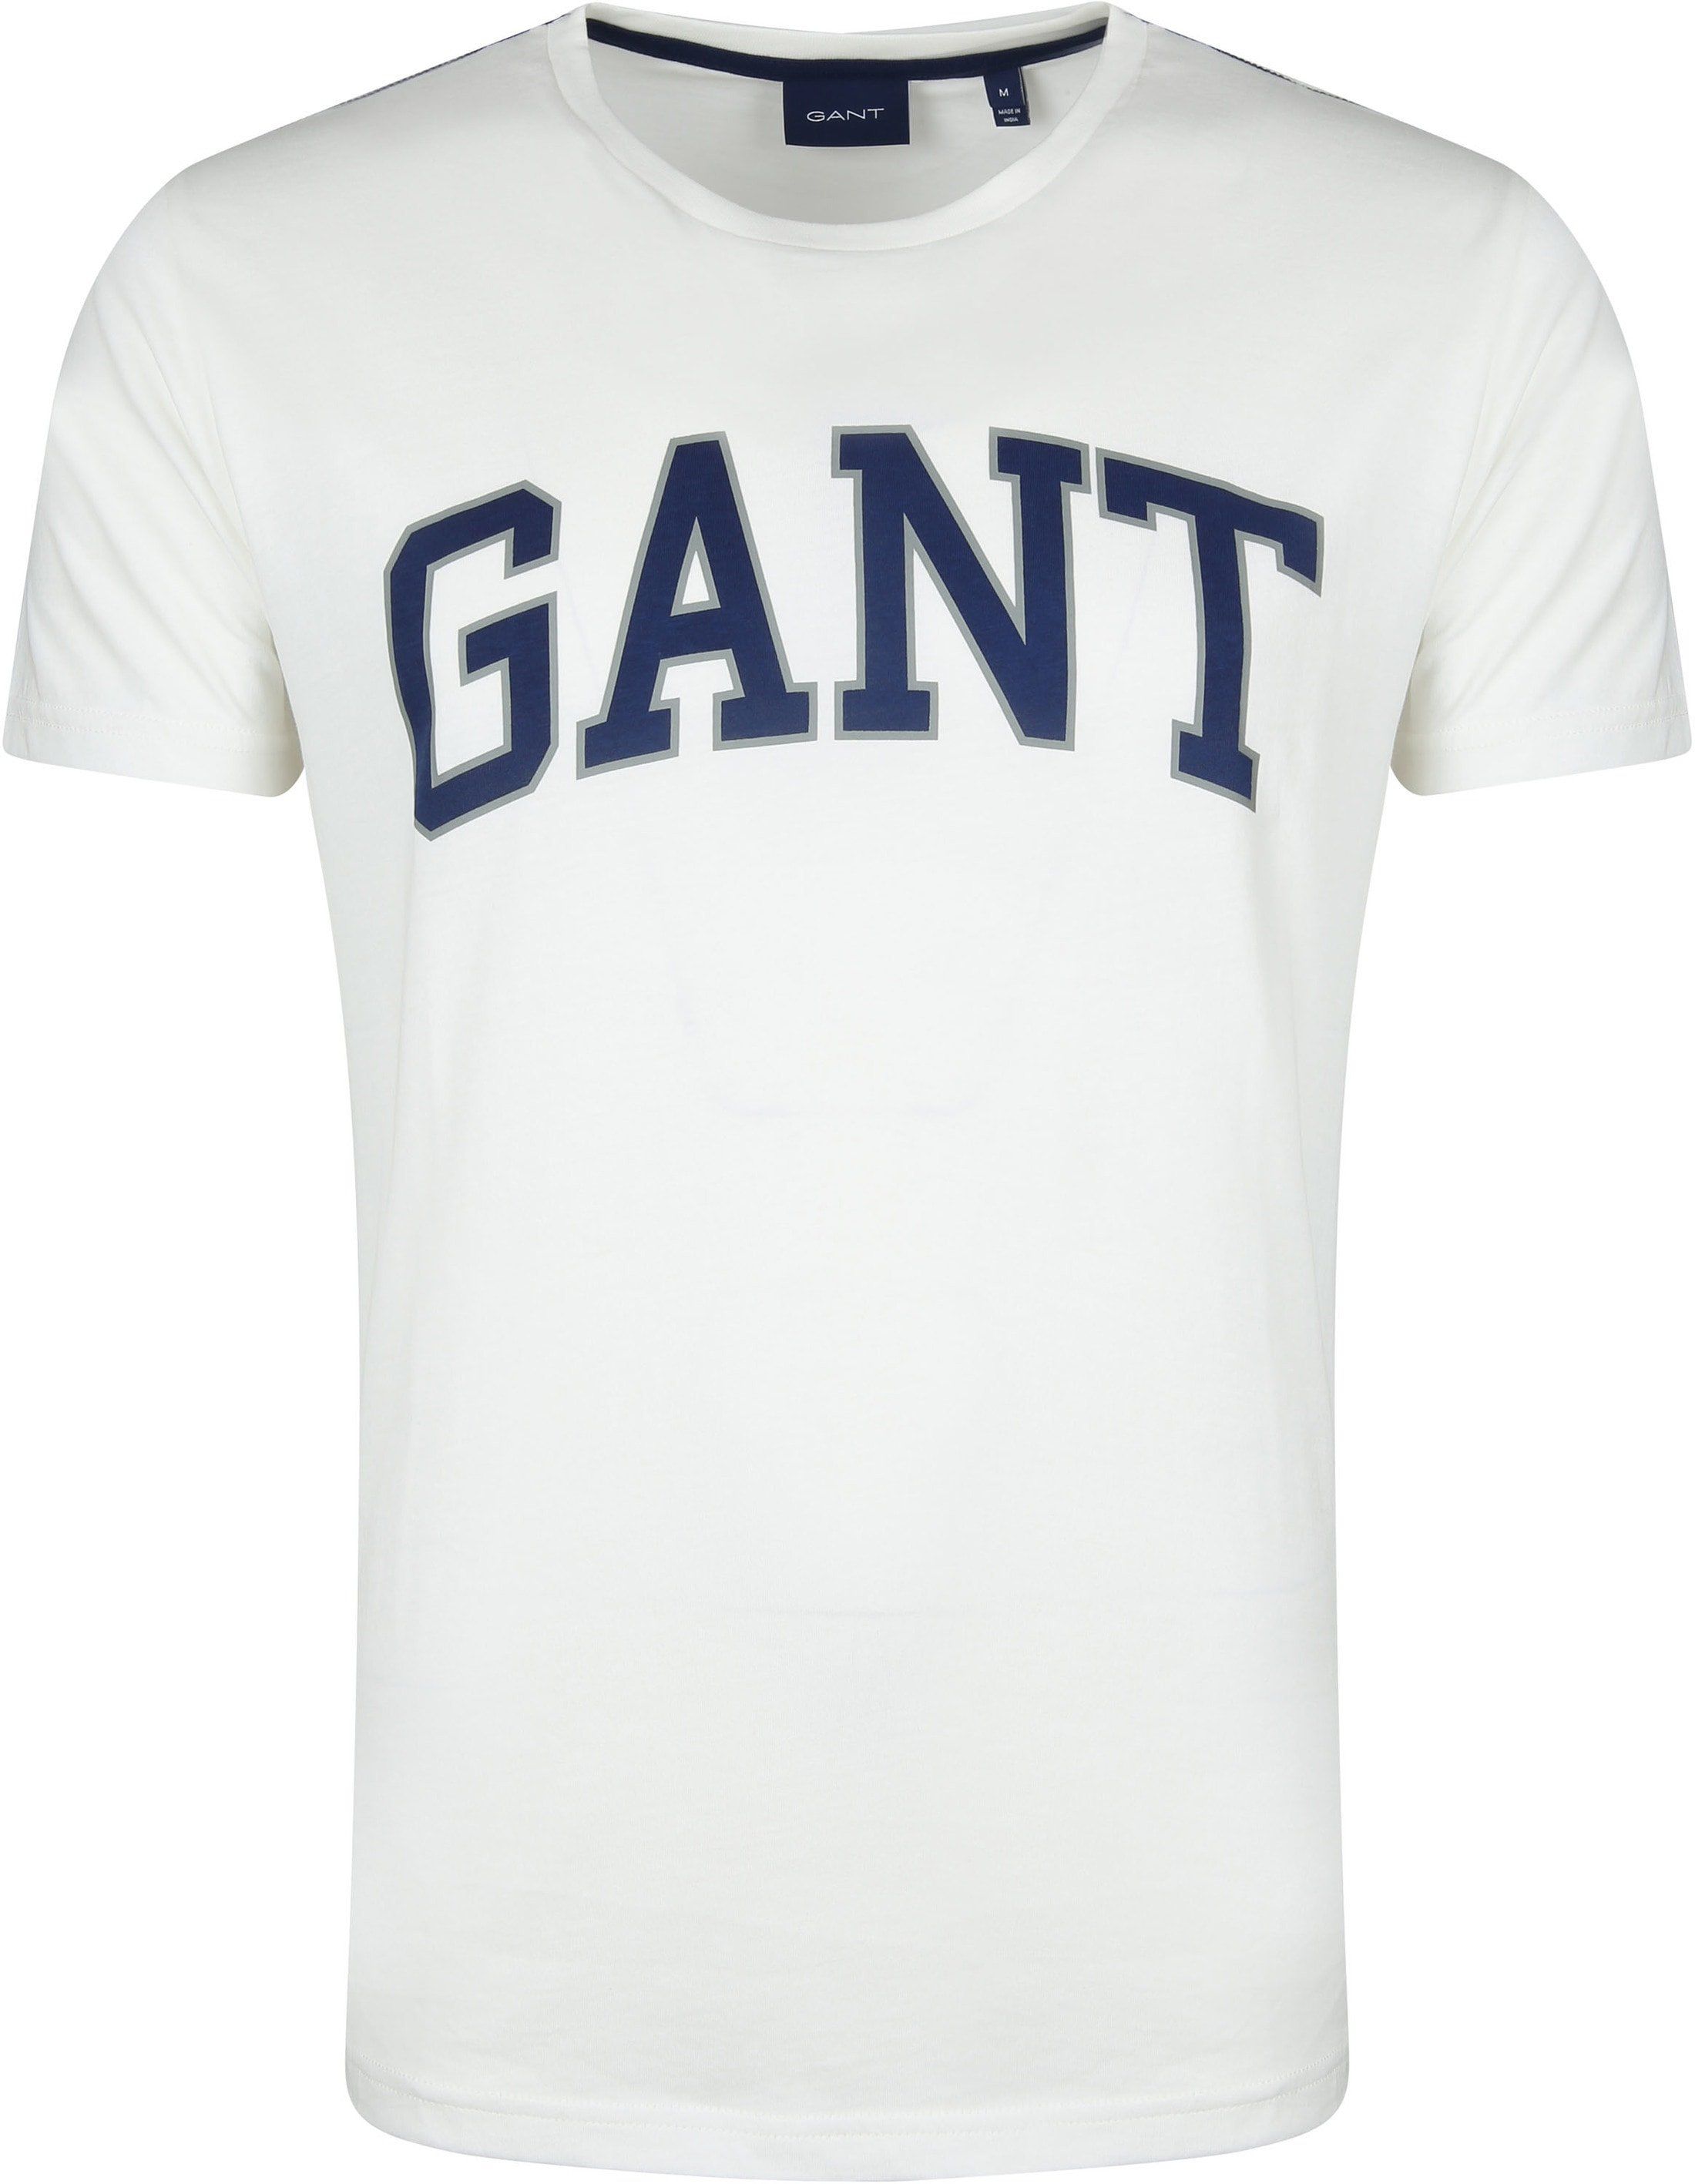 Gant T-shirt Graphic Blue Off-White size L